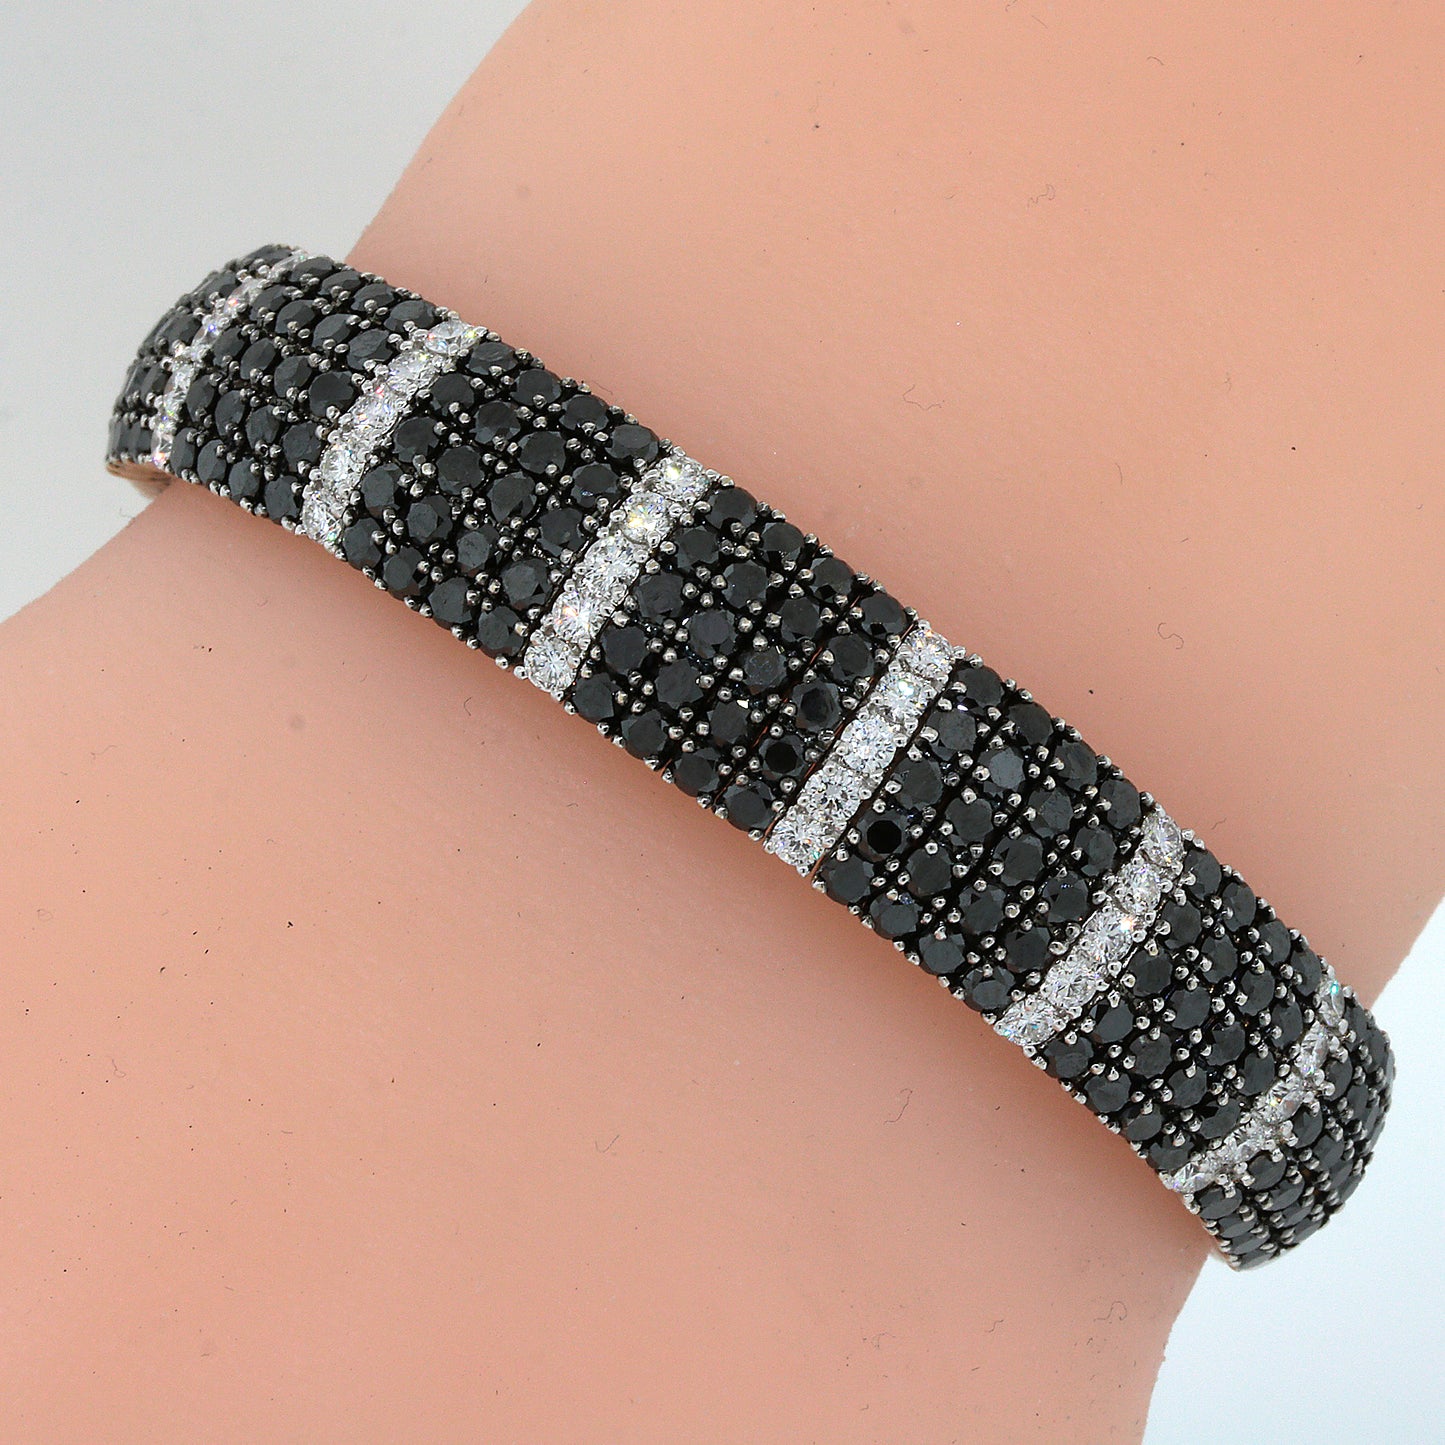 Black and White Diamond Cuff Bracelet